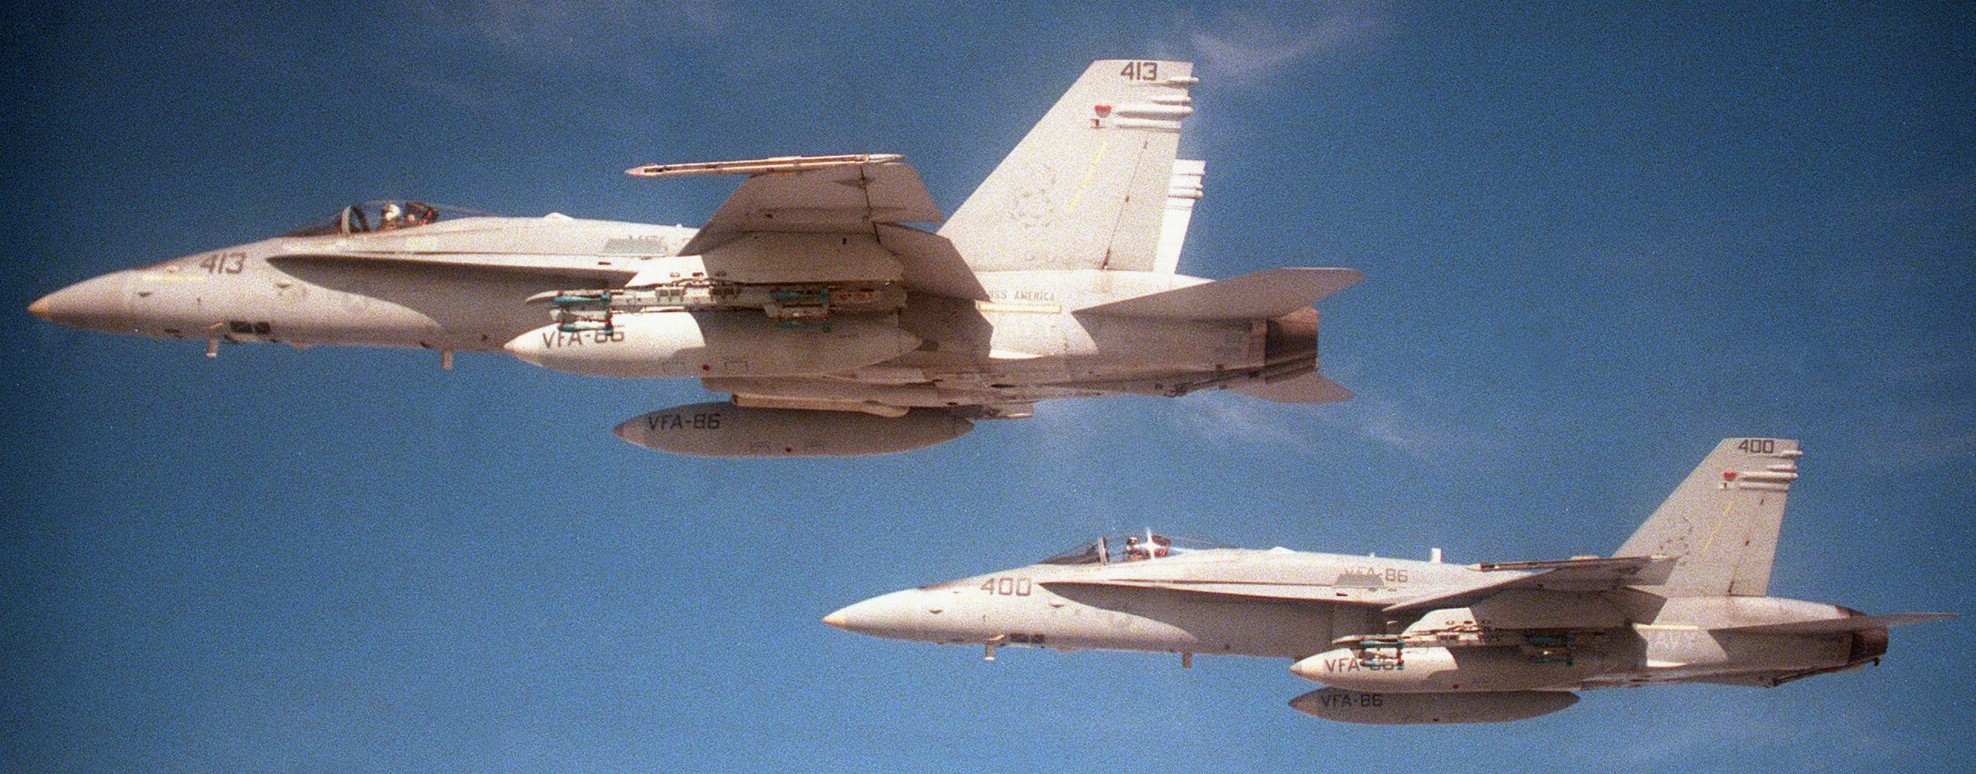 vfa-86 sidewinders strike fighter squadron f/a-18c hornet us navy townsend bombing range georgia 03